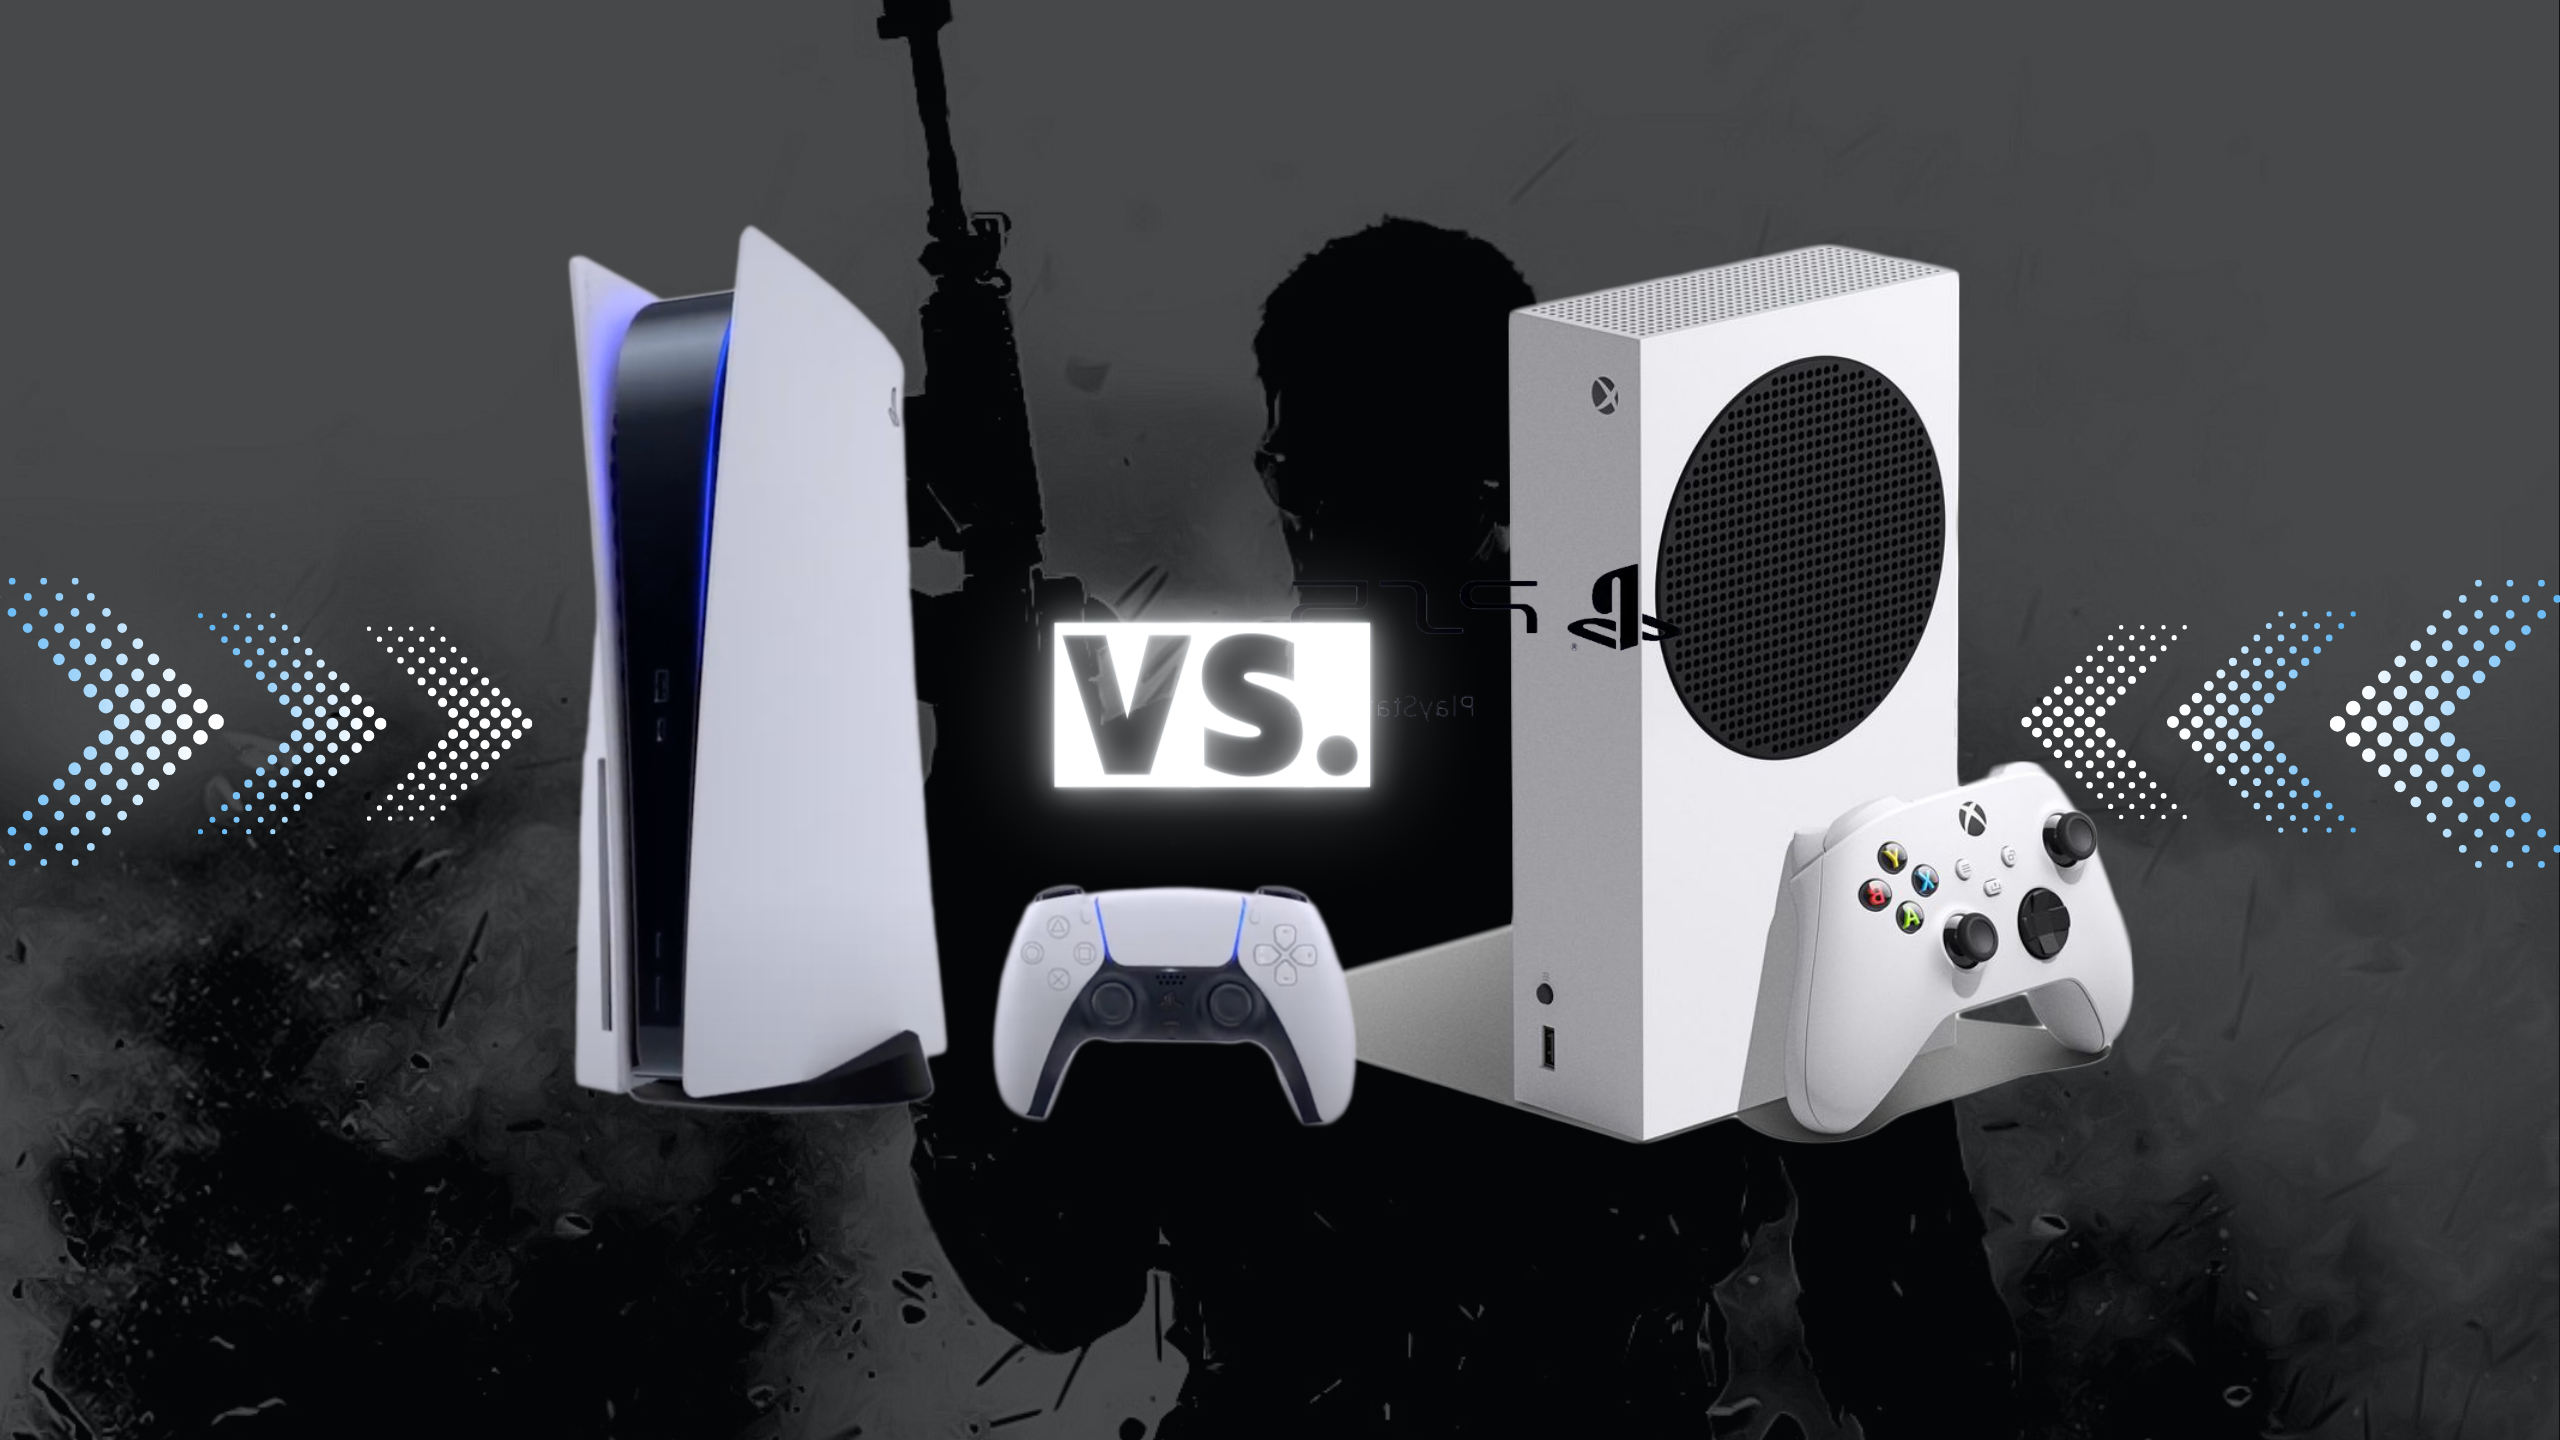 PS5 vs. Xbox - Who's Winning the Console Market Share Showdown